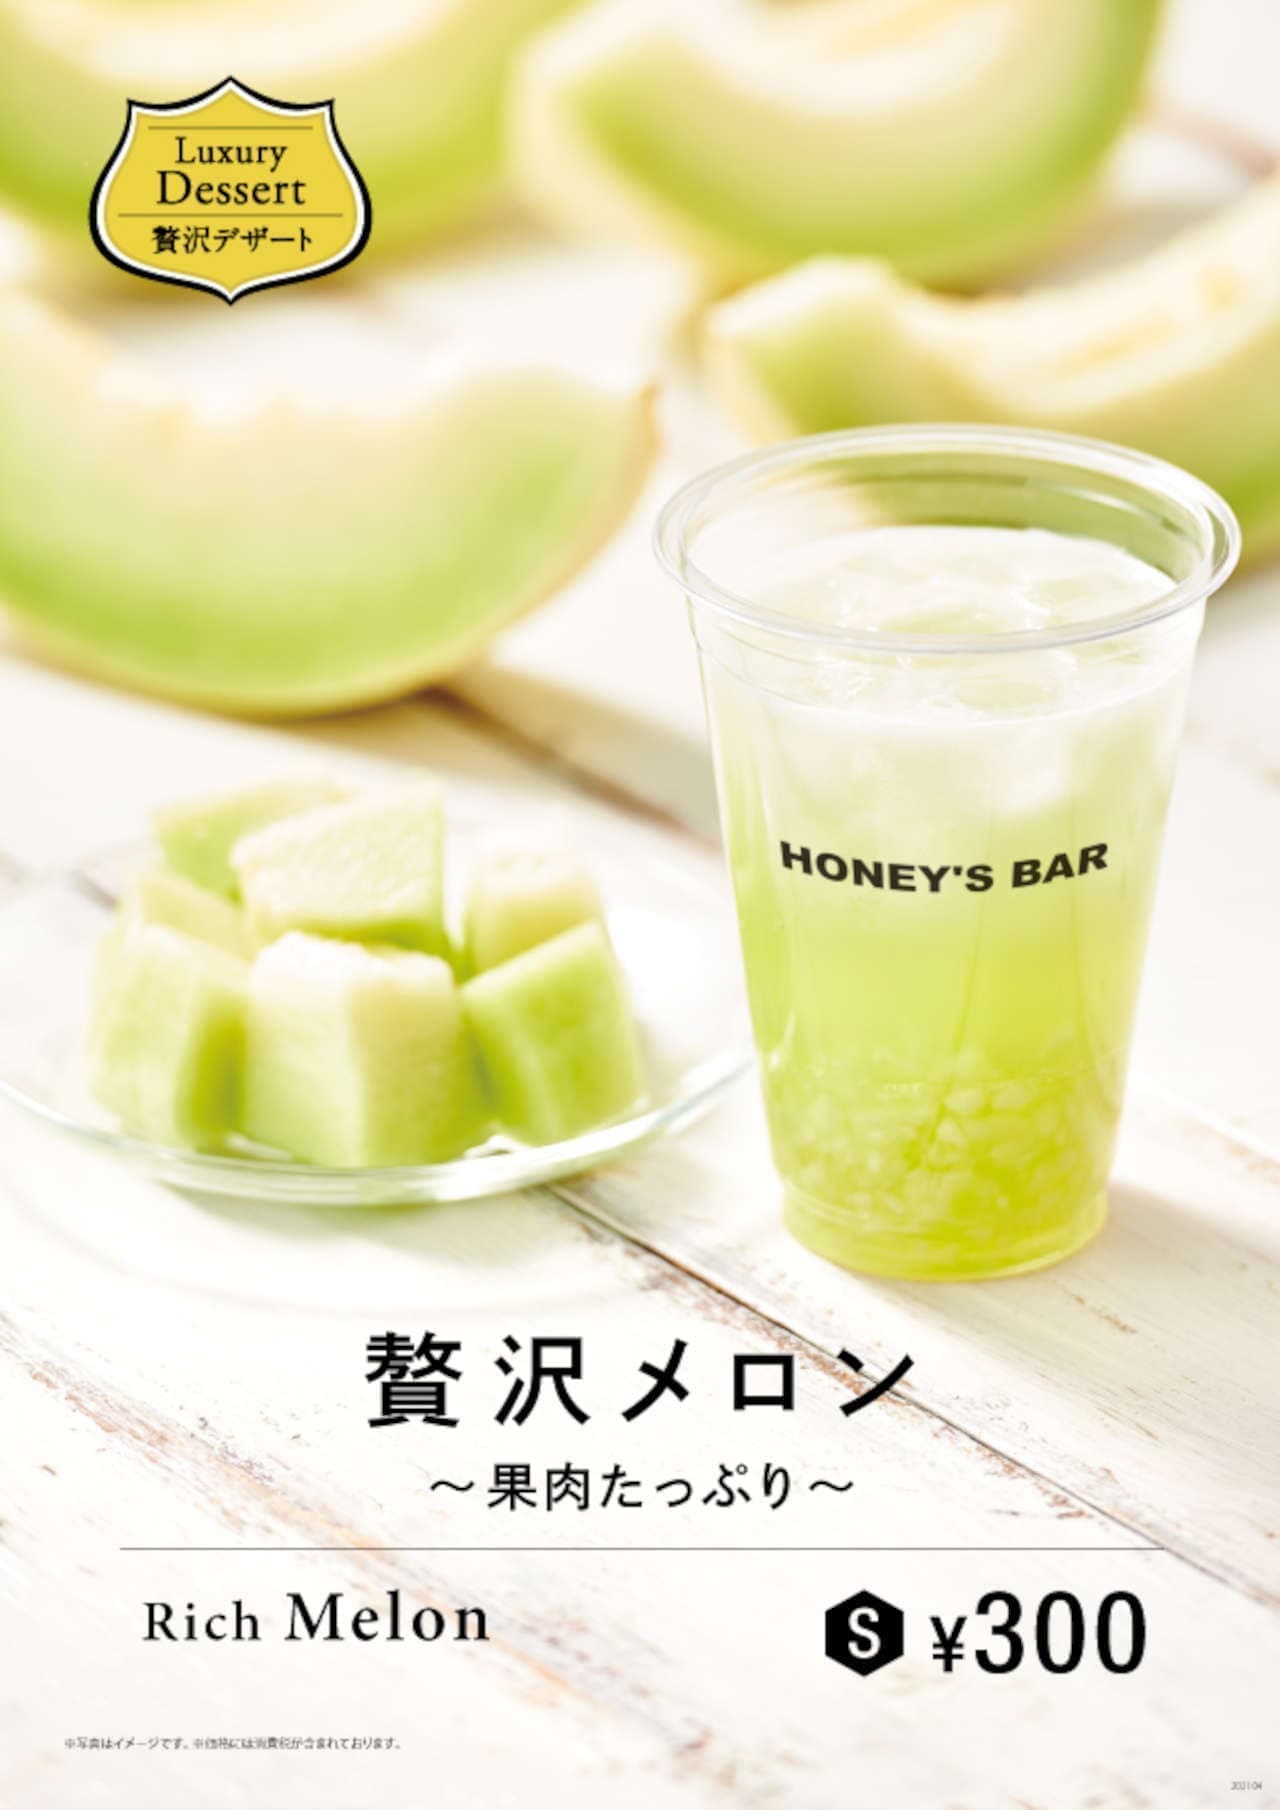 Honeys bar "luxury melon-plenty of pulp"